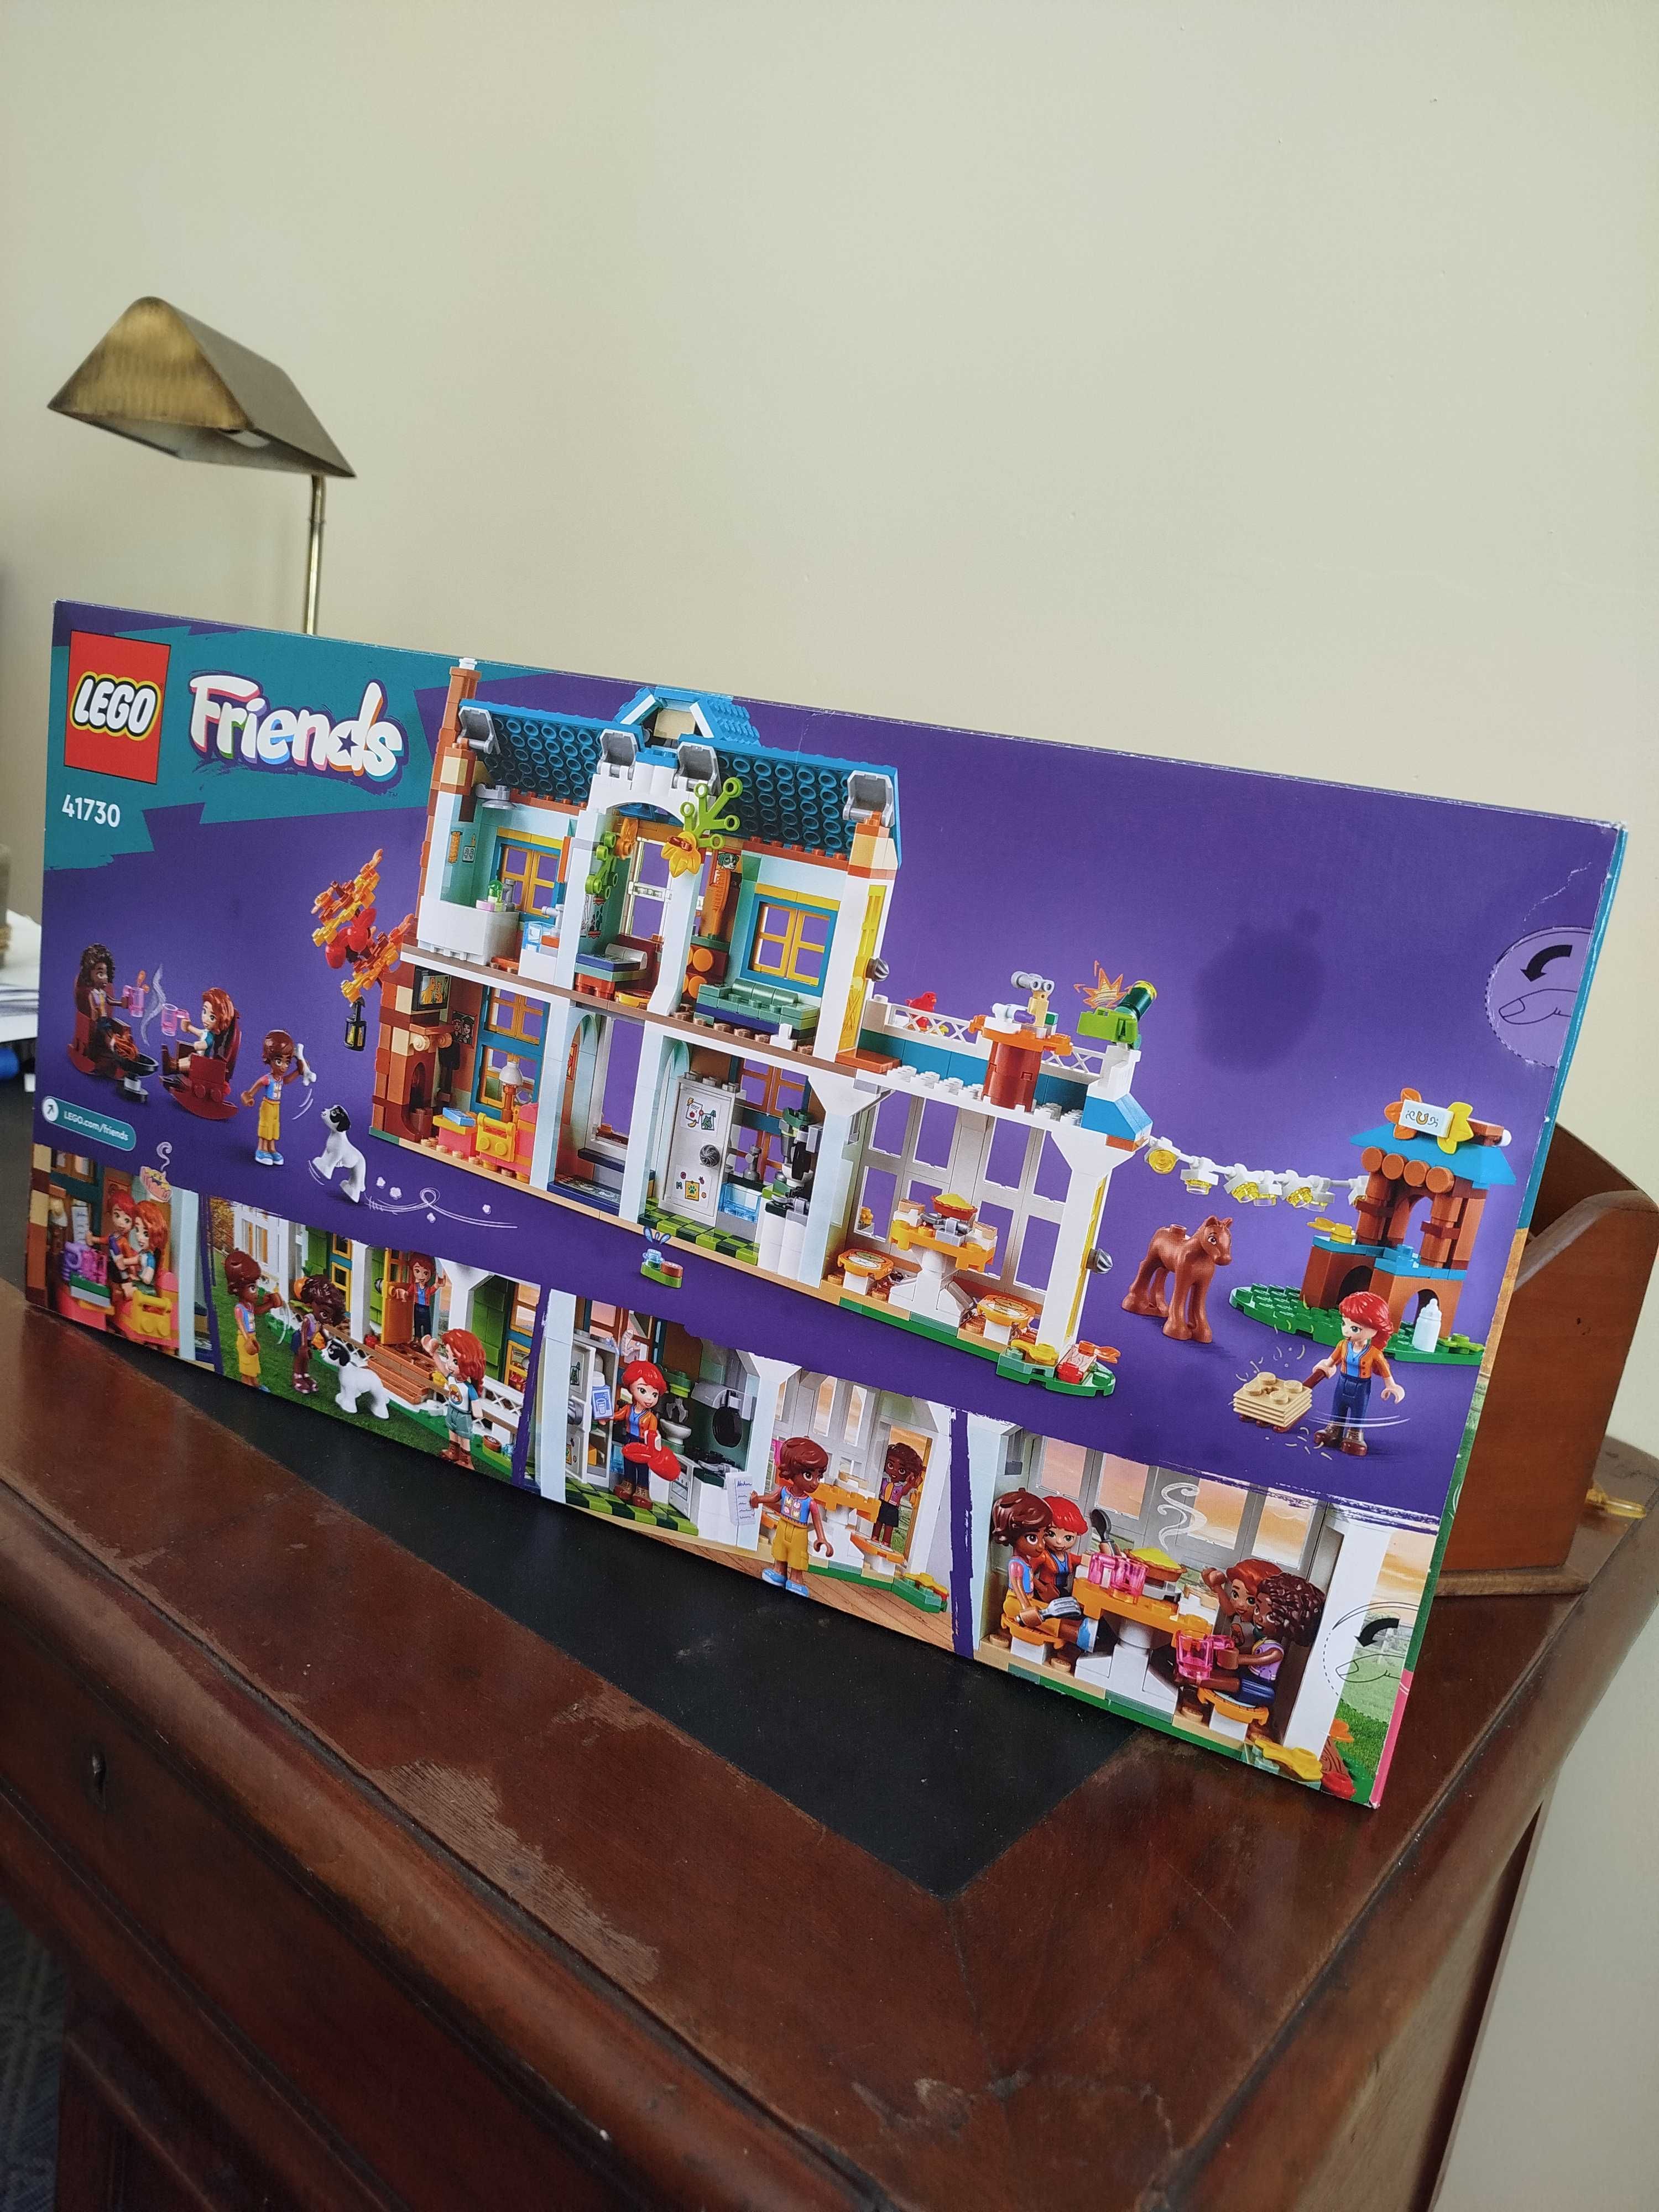 Casa grande "Friends" Lego